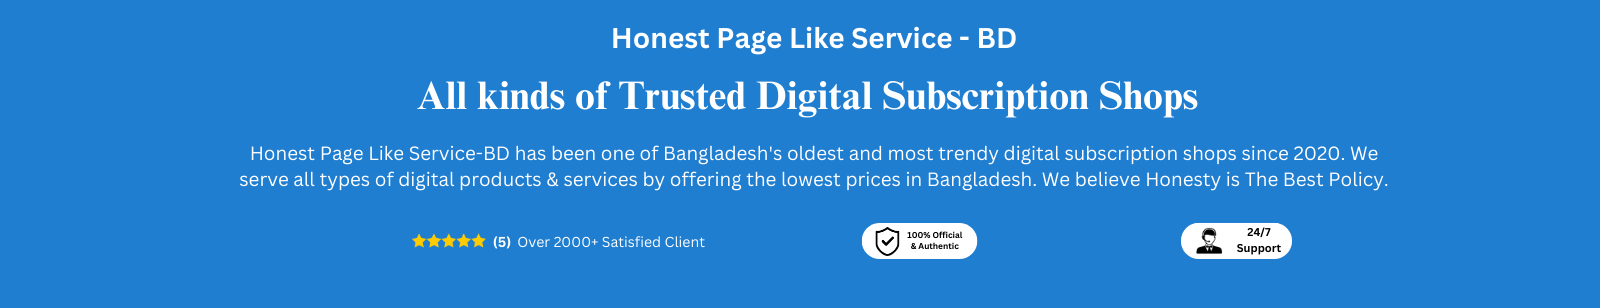 Honest page like service bd